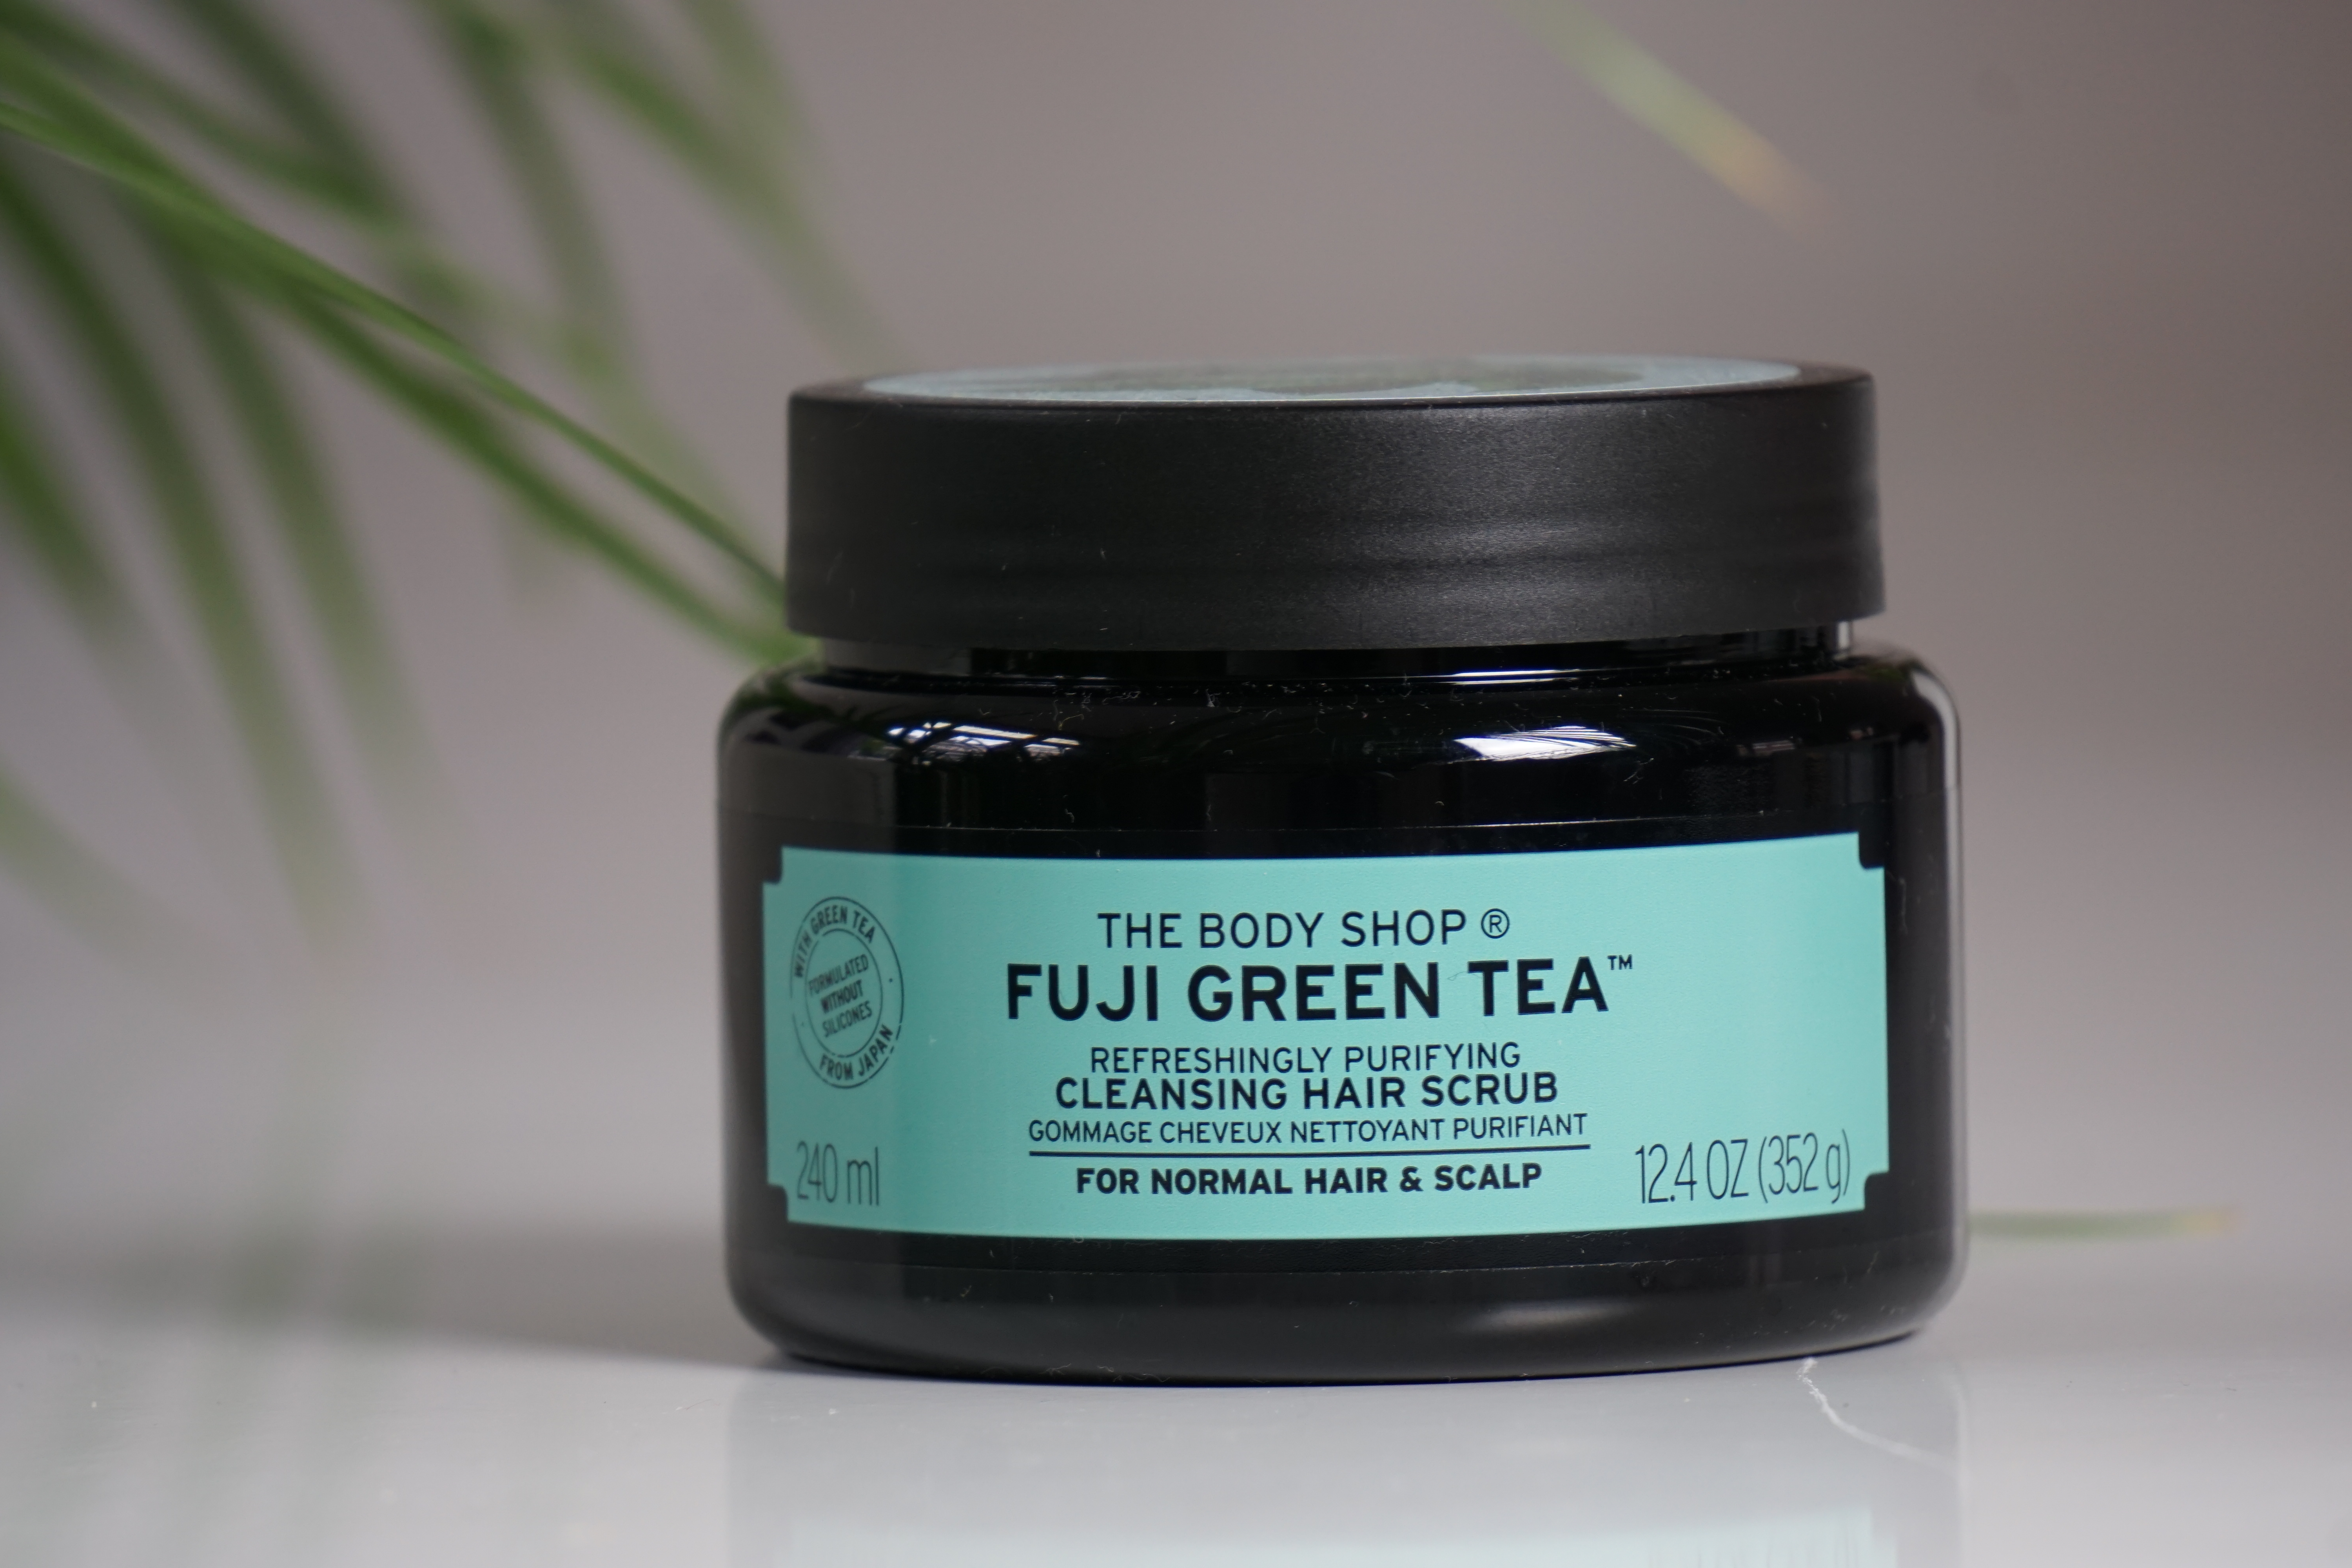 THE BODY SHOP - FUJI GREEN TEA CLEANSING HAIR SCRUB - Reena Jagram